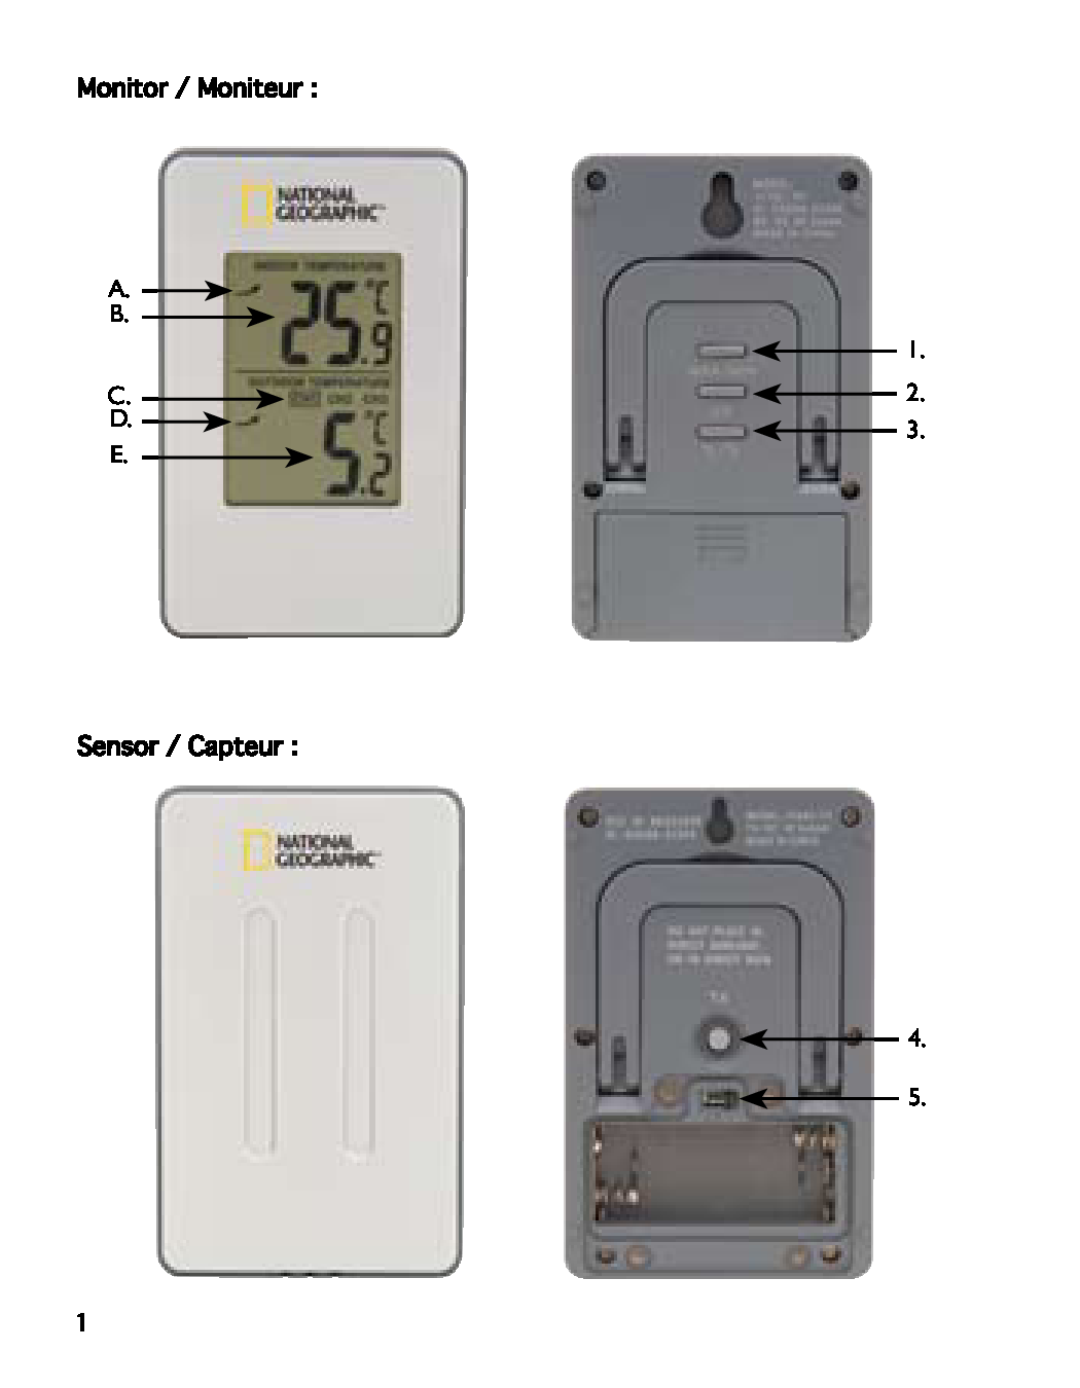 National Geographic 315NC manual Monitor / Moniteur A B C D E Sensor / Capteur 